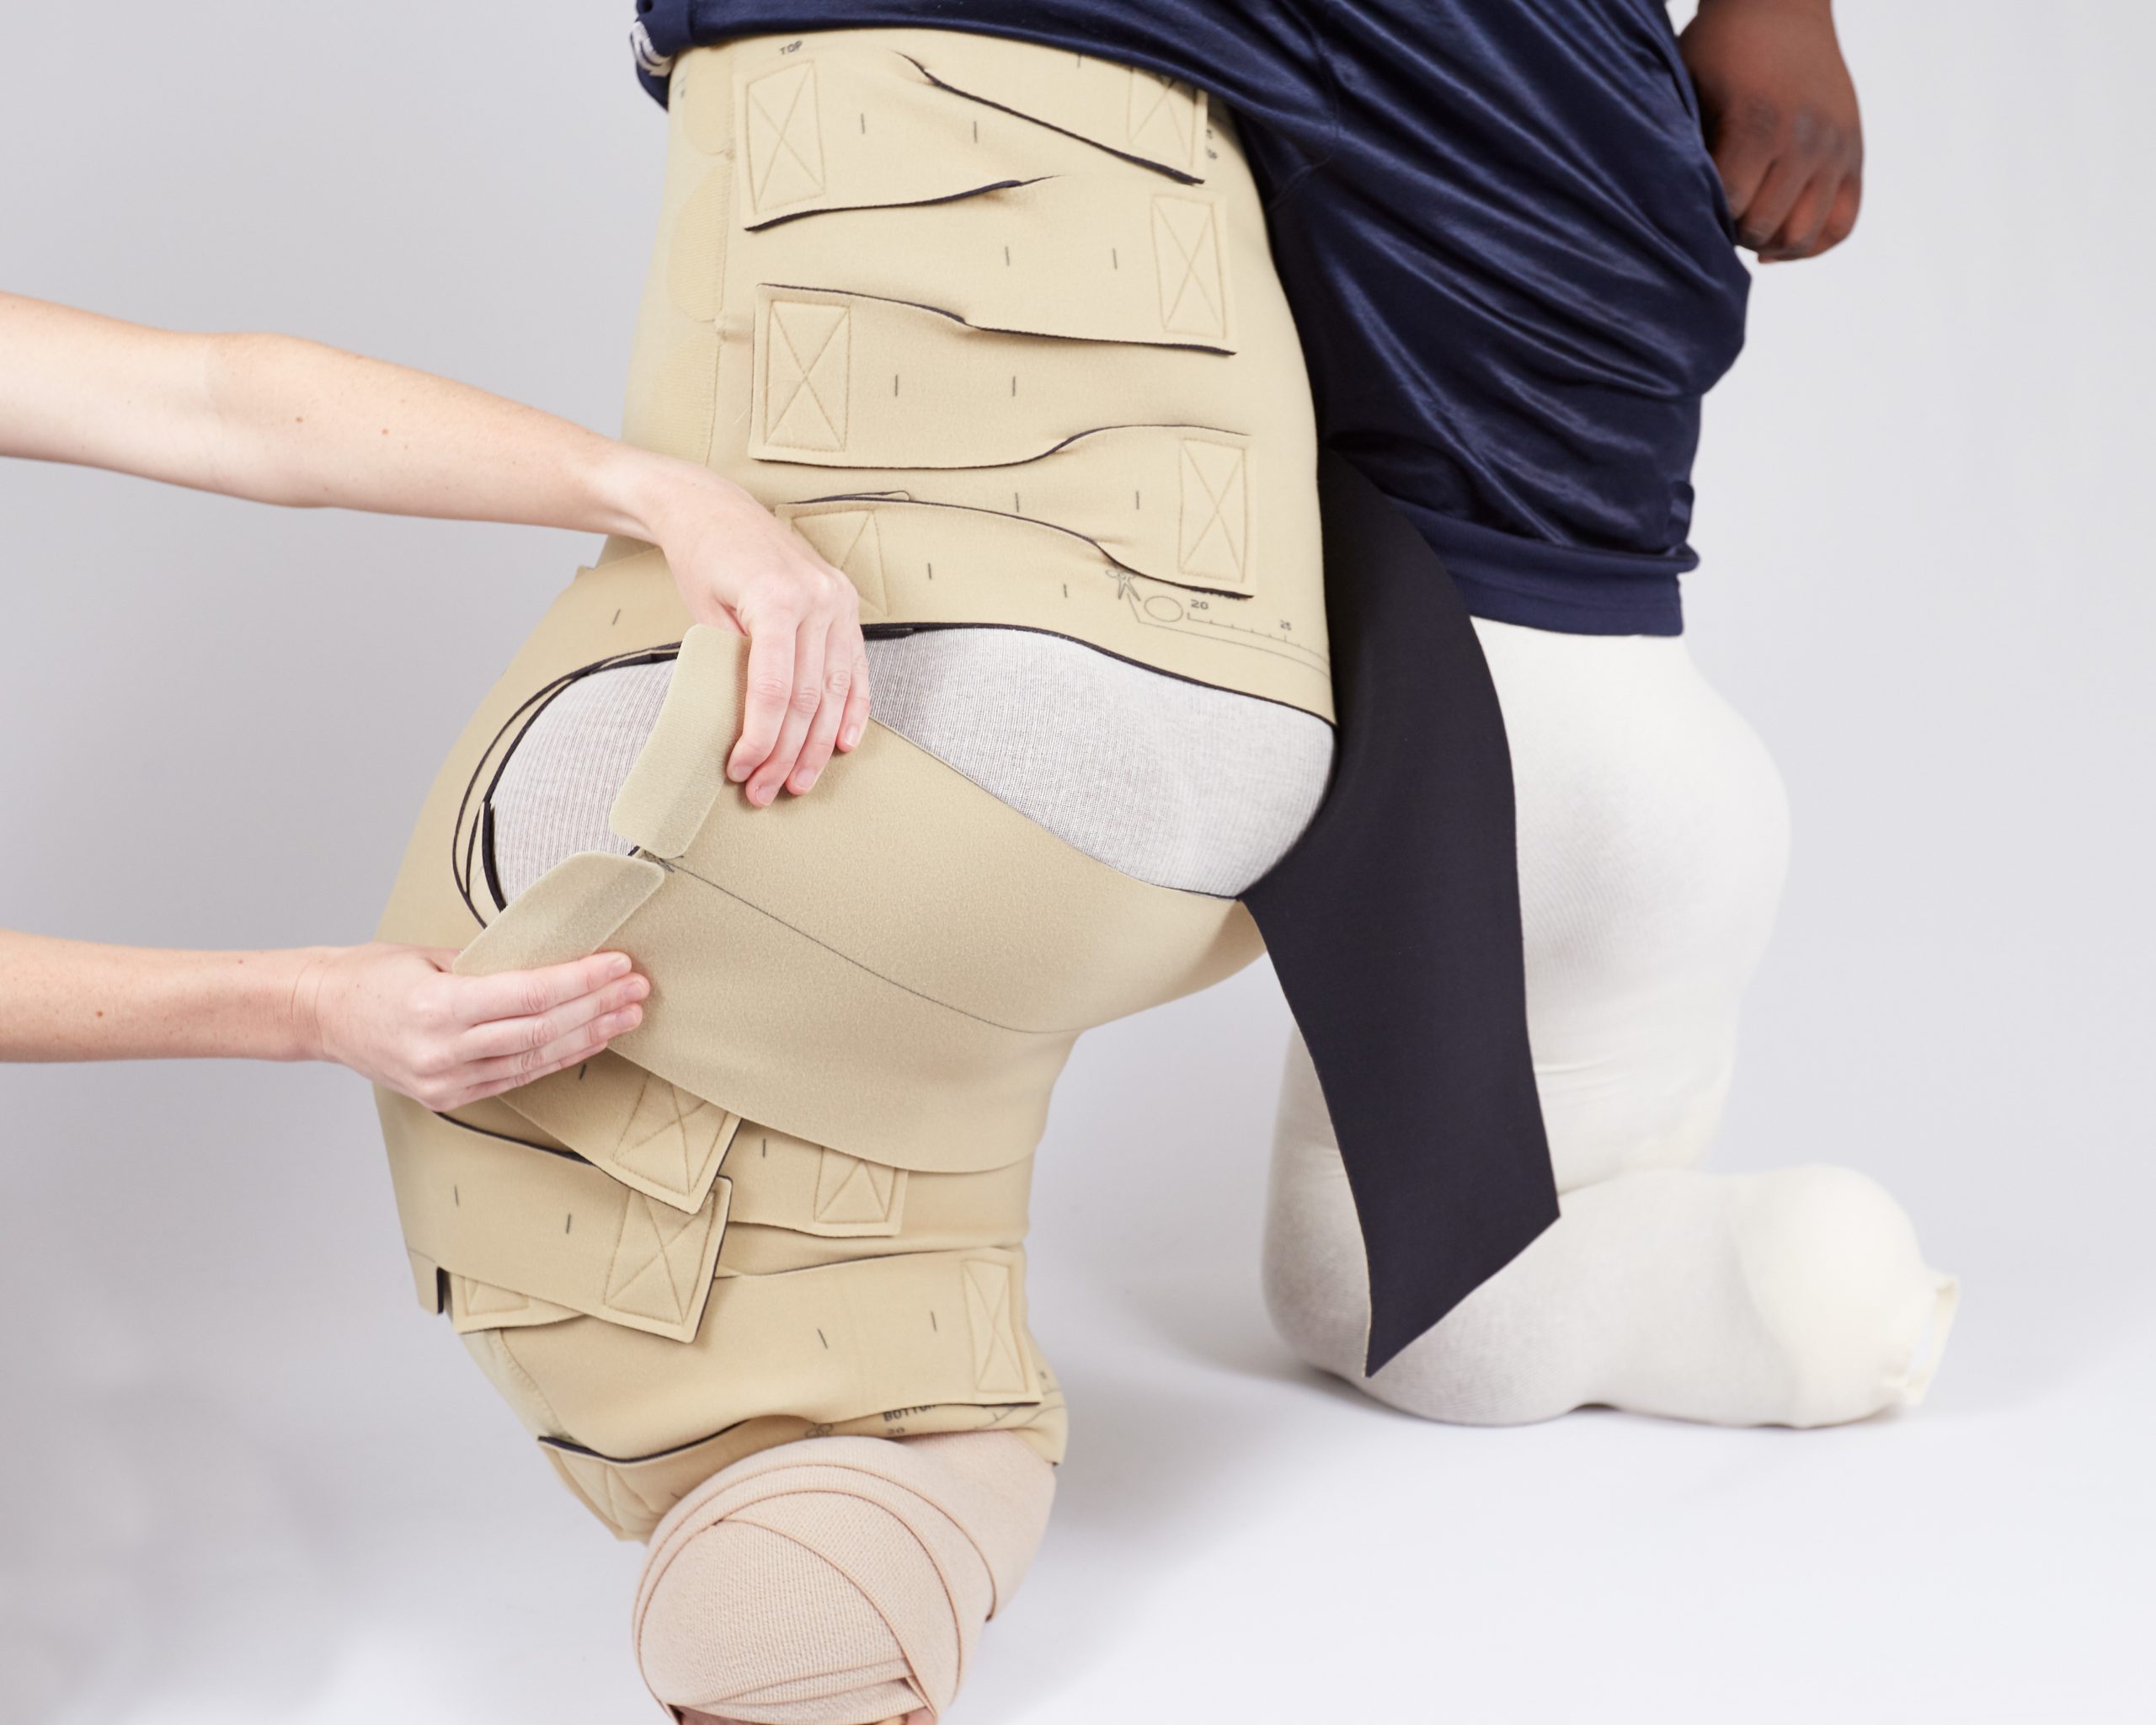  Medi Circaid Reduction Kit Lower Leg Wide Width Long Length  40cm : Health & Household